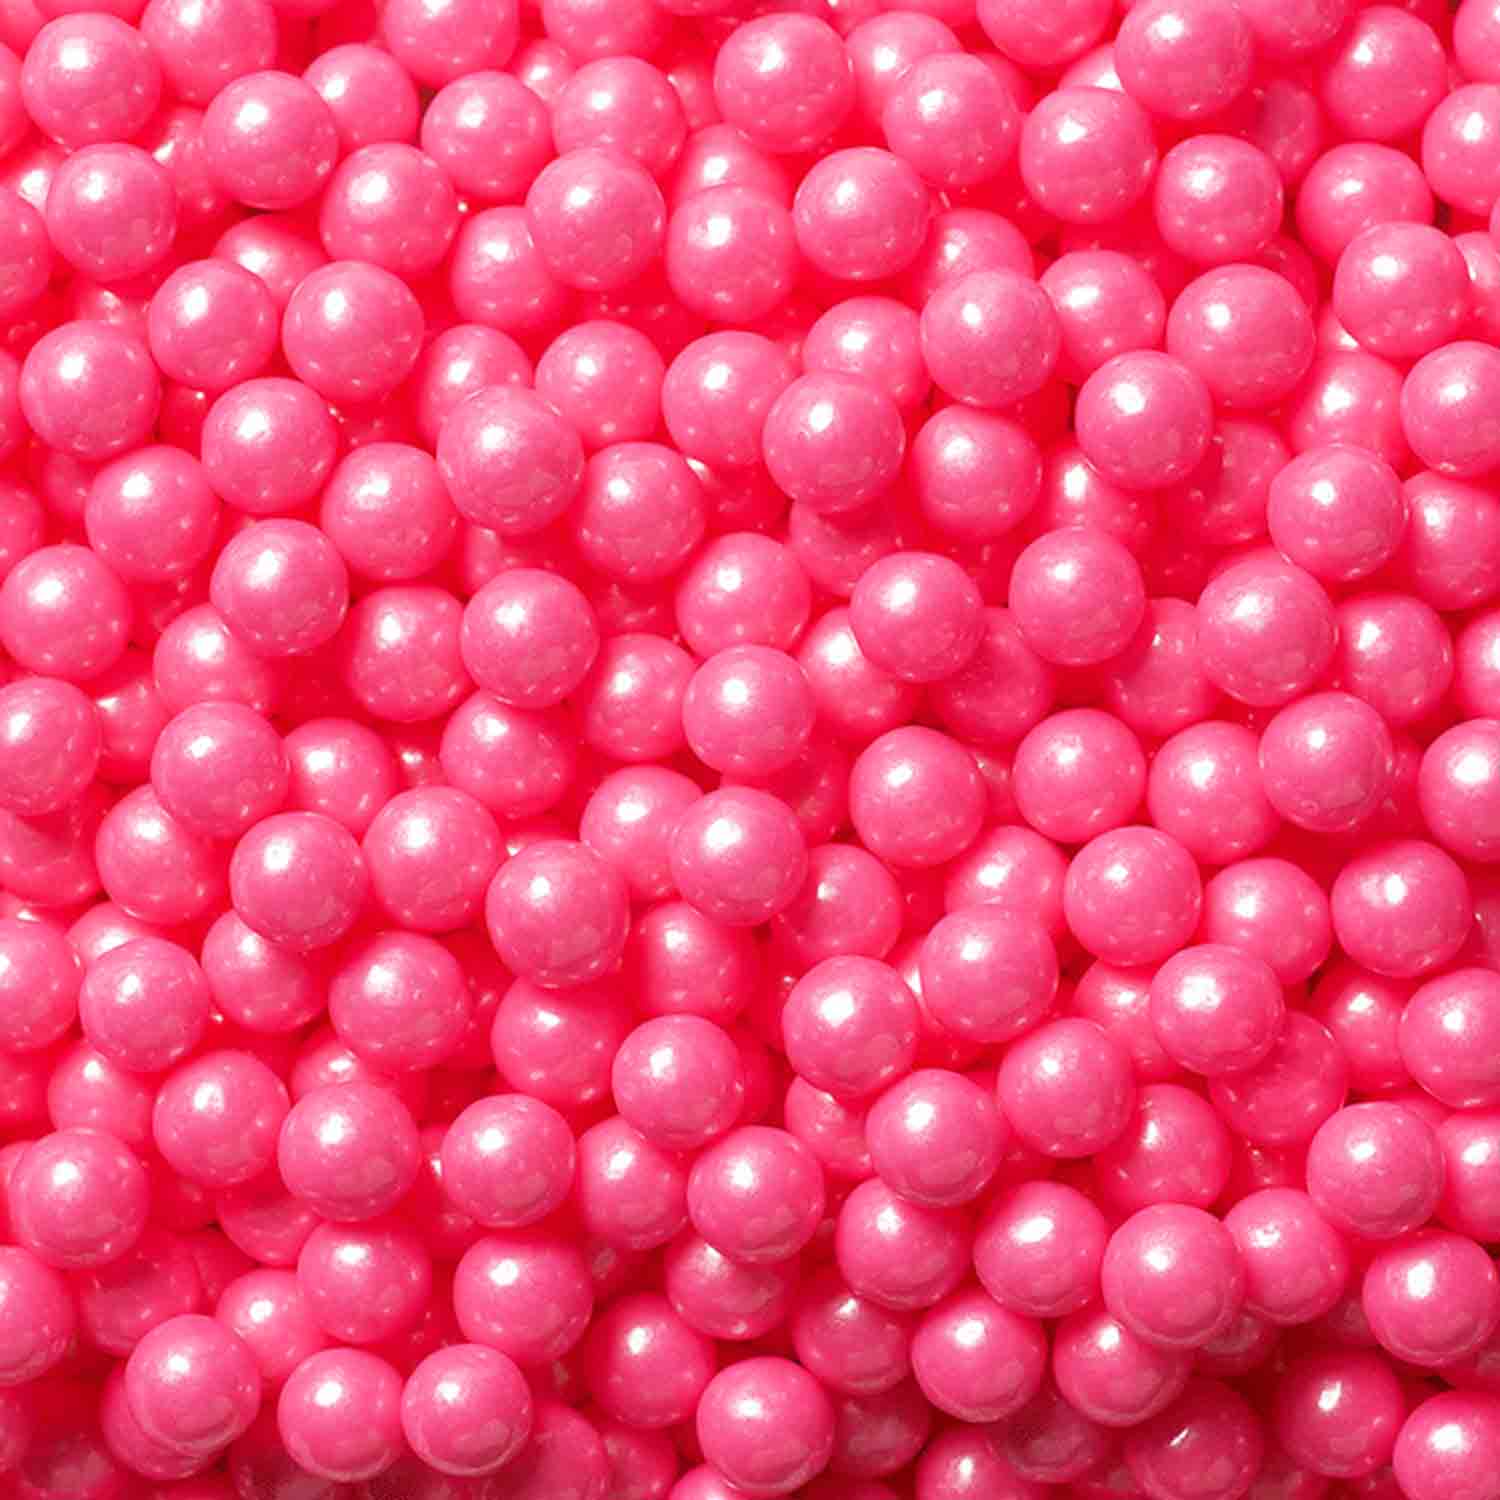 7mm Bright Pink Shimmer Sugar Pearls